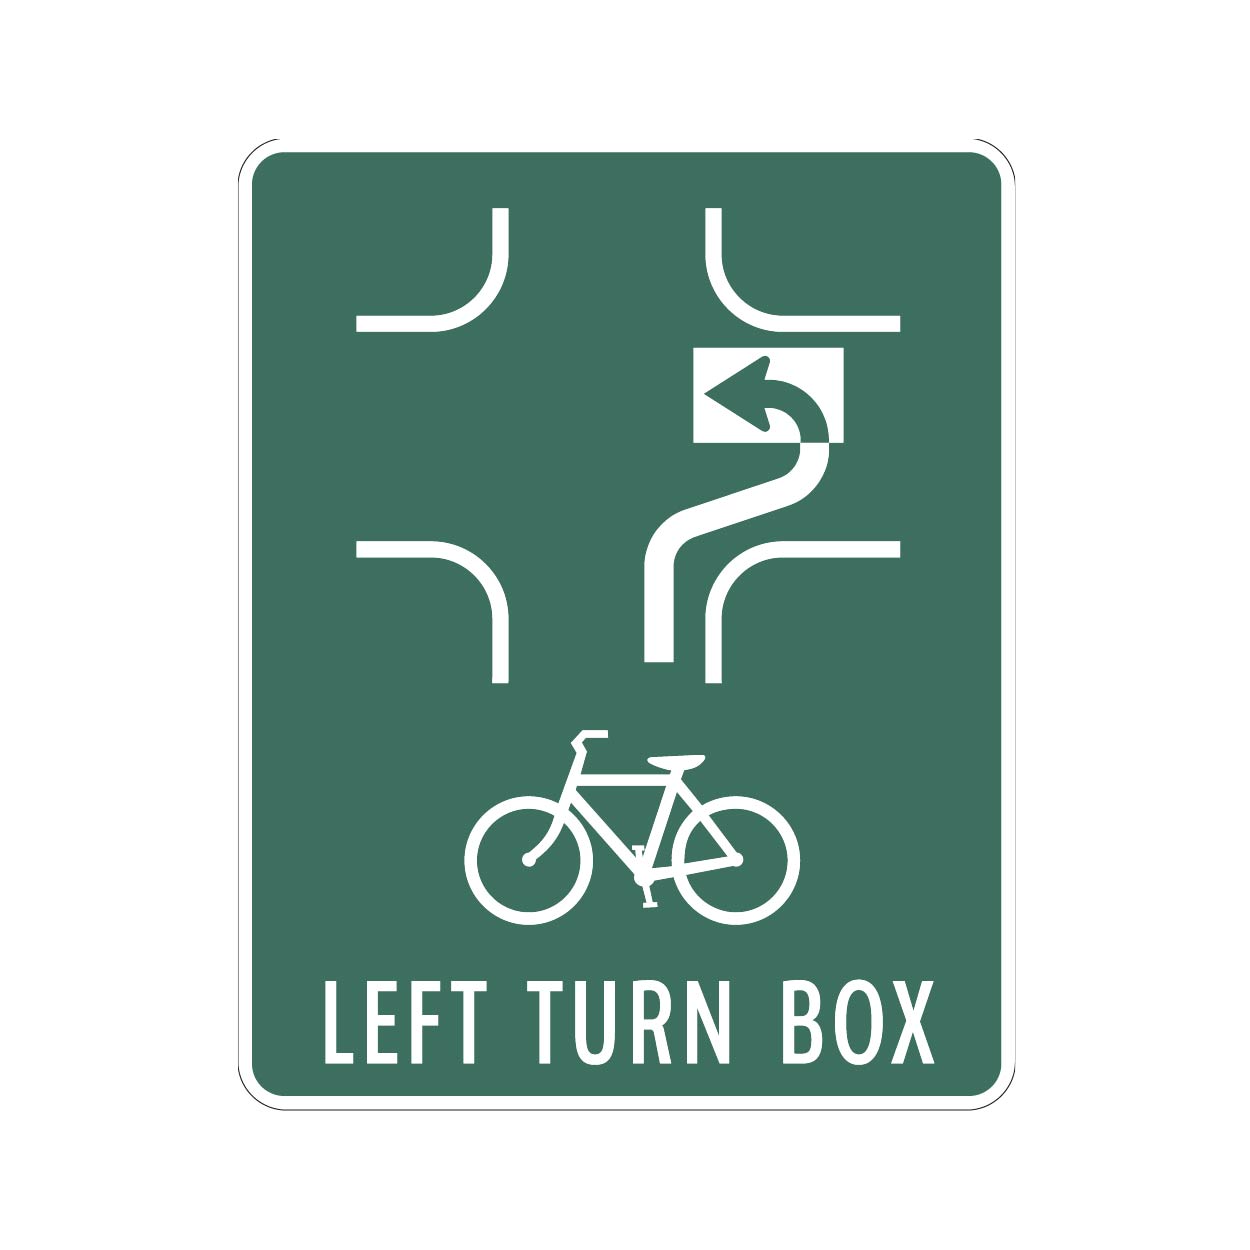 Left Turn Box Pavement Marking